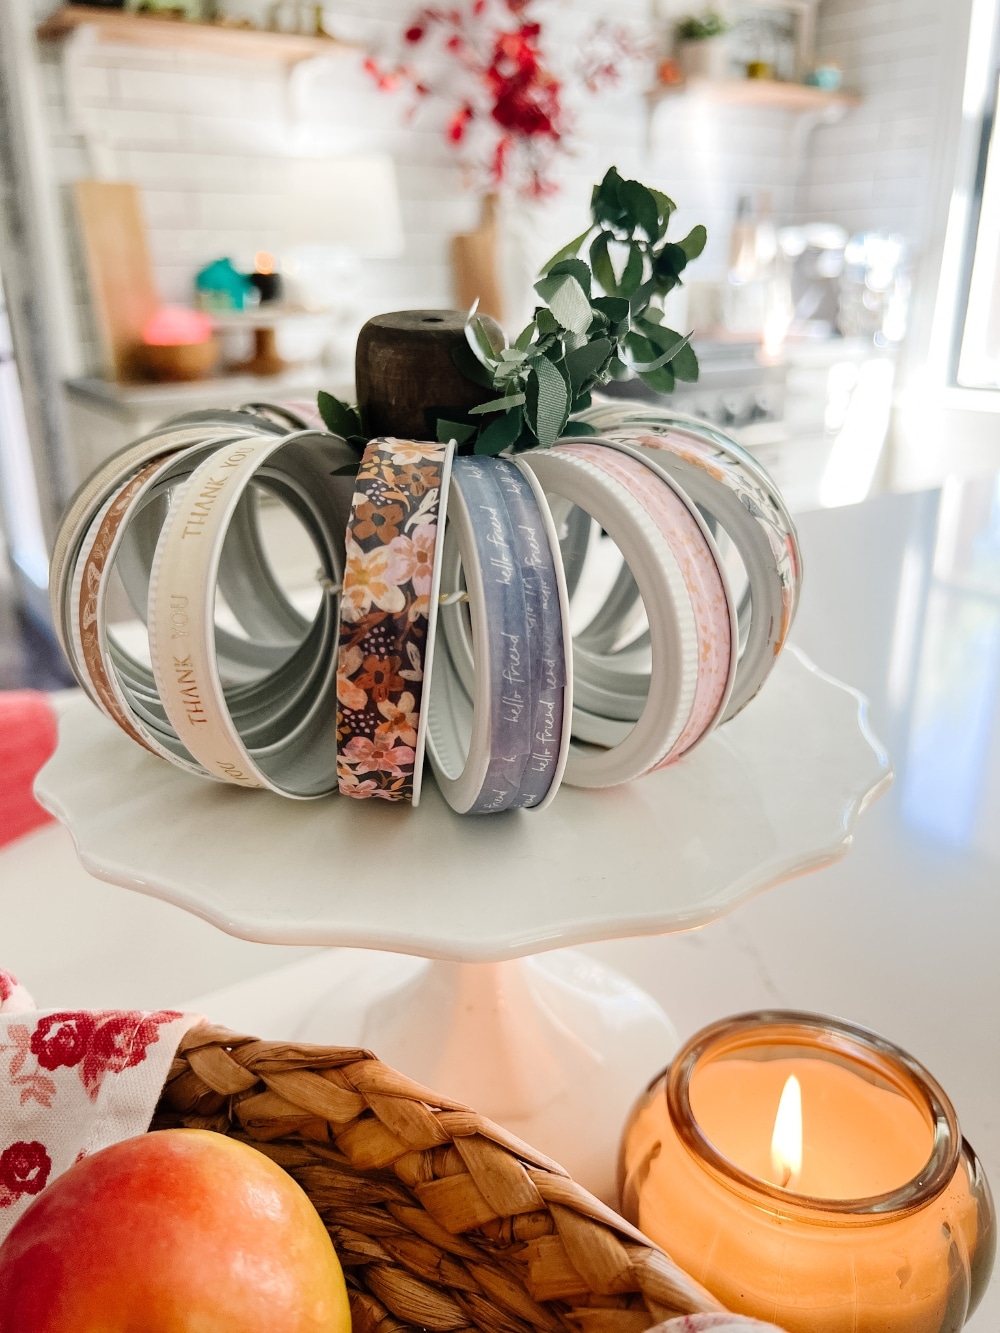 Washi Tape Mason Jar Lid Pumpkin. Upcycle your mason jar lids into this sweet and colorful pumpkin! 